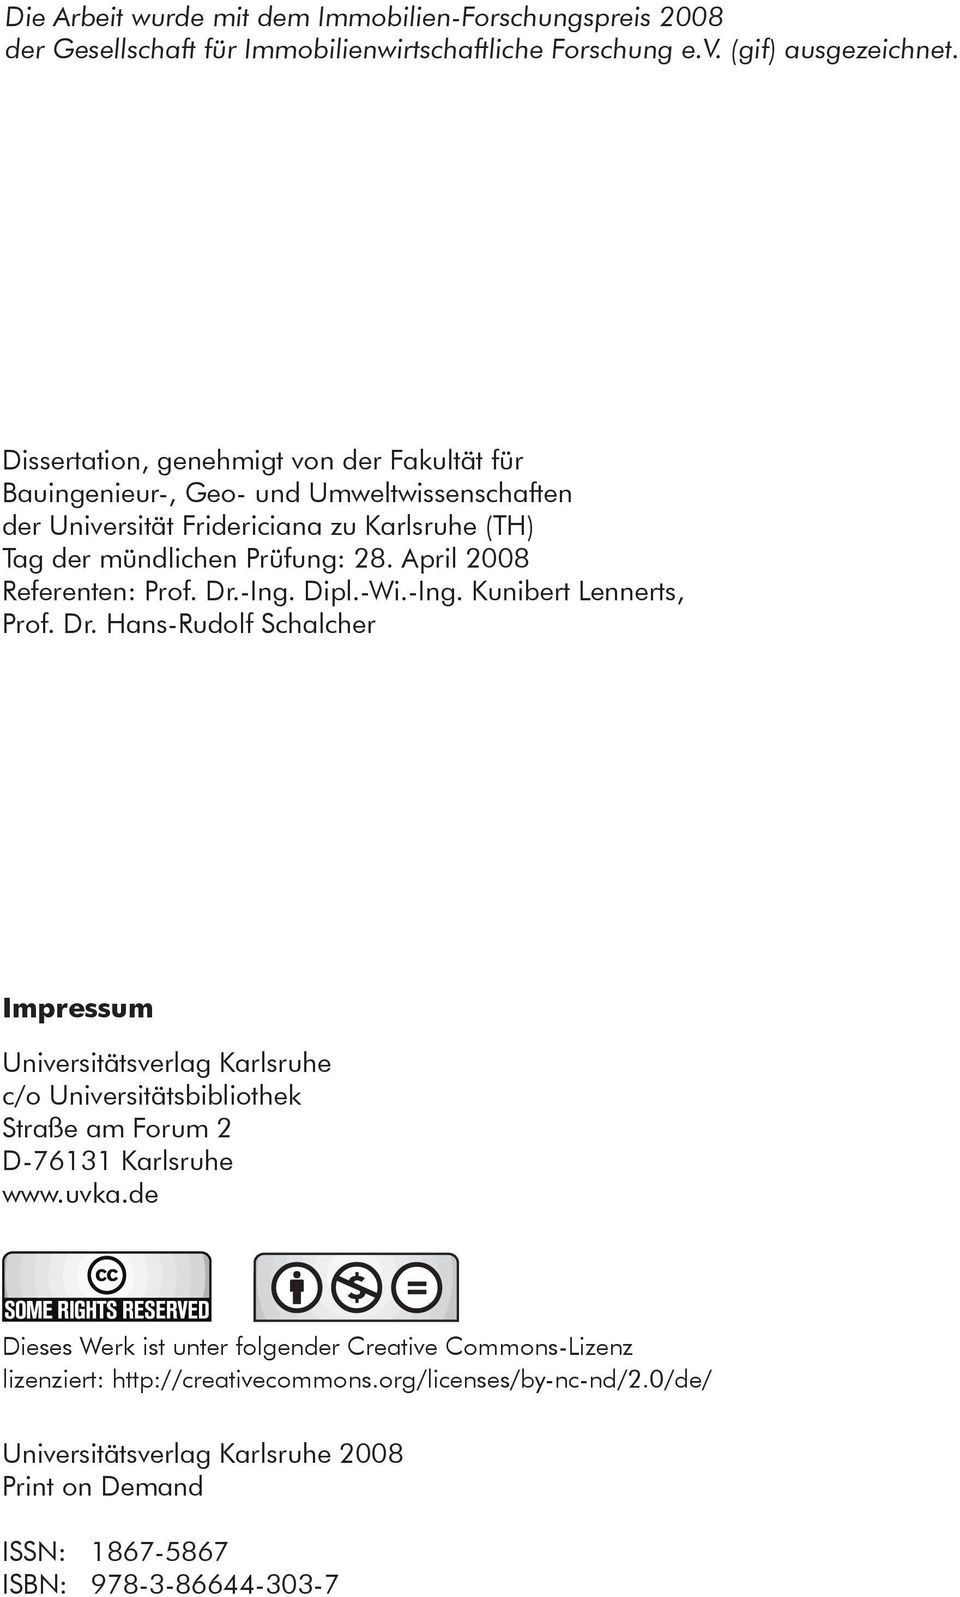 April 2008 Referenten: Prof. Dr.-Ing. Dipl.-Wi.-Ing. Kunibert Lennerts, Prof. Dr. Hans-Rudolf Schalcher Impressum Universitätsverlag Karlsruhe c/o Universitätsbibliothek Straße am Forum 2 D-76131 Karlsruhe www.